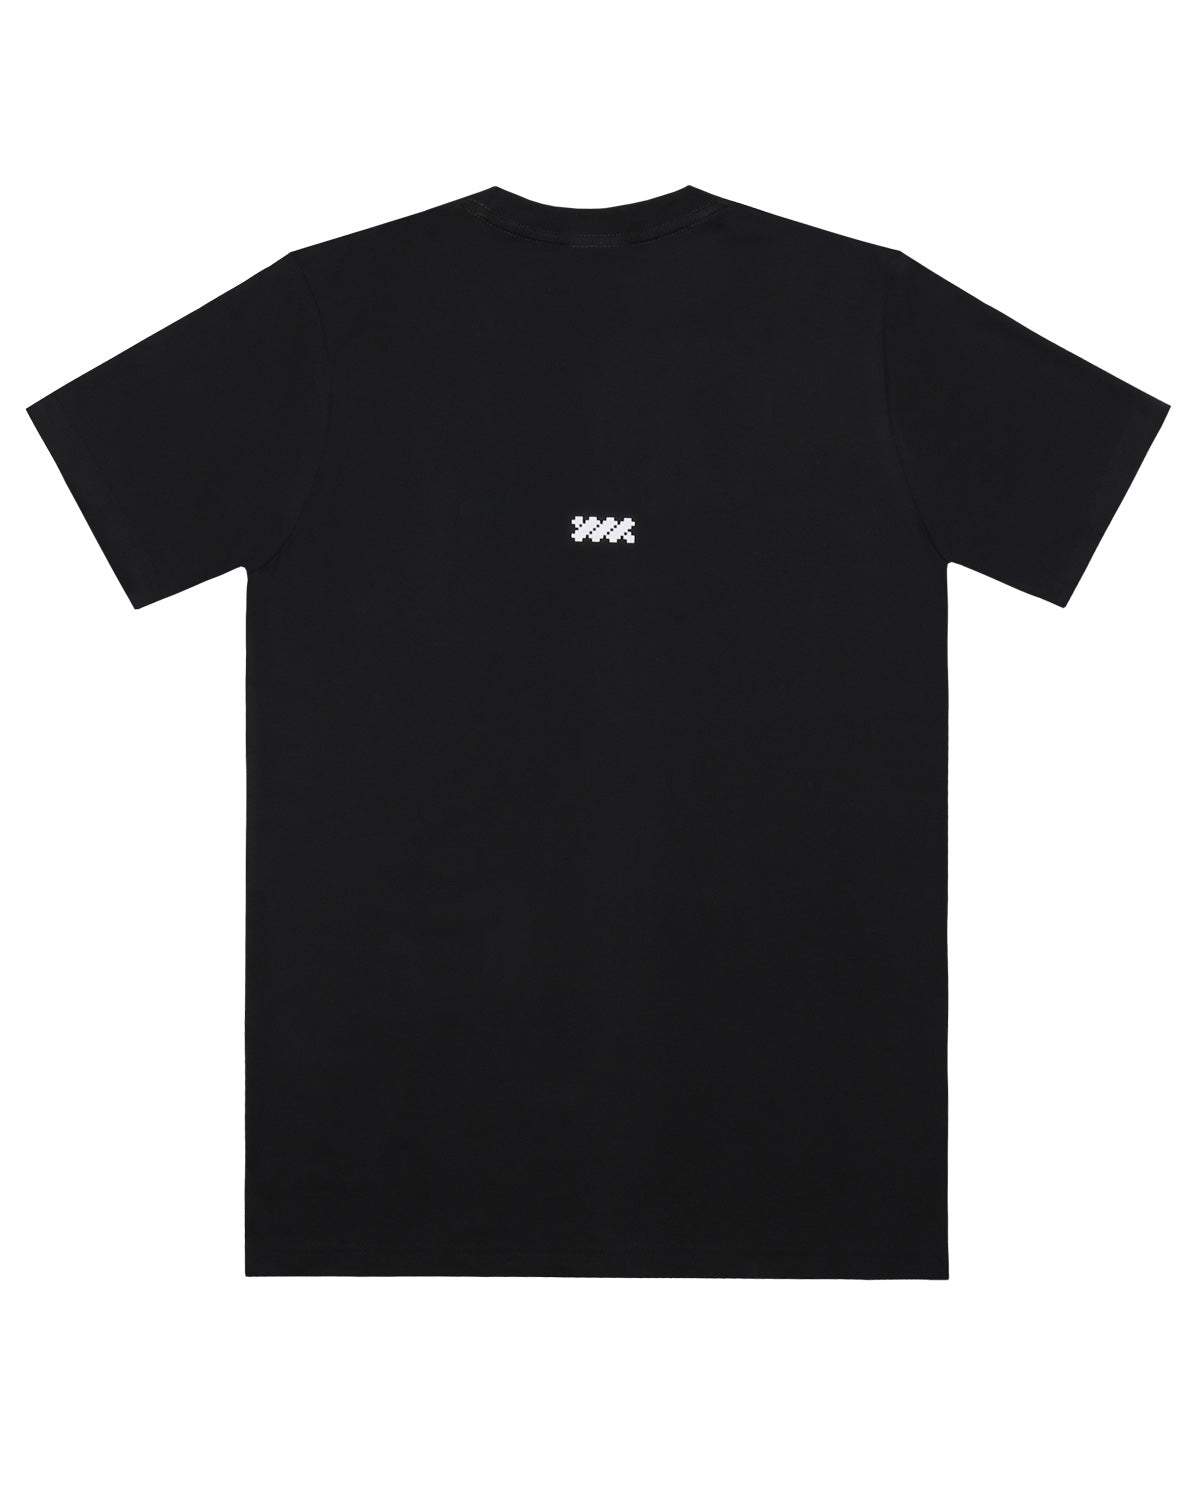 Wadezig! T-Shirt - Richocet Black